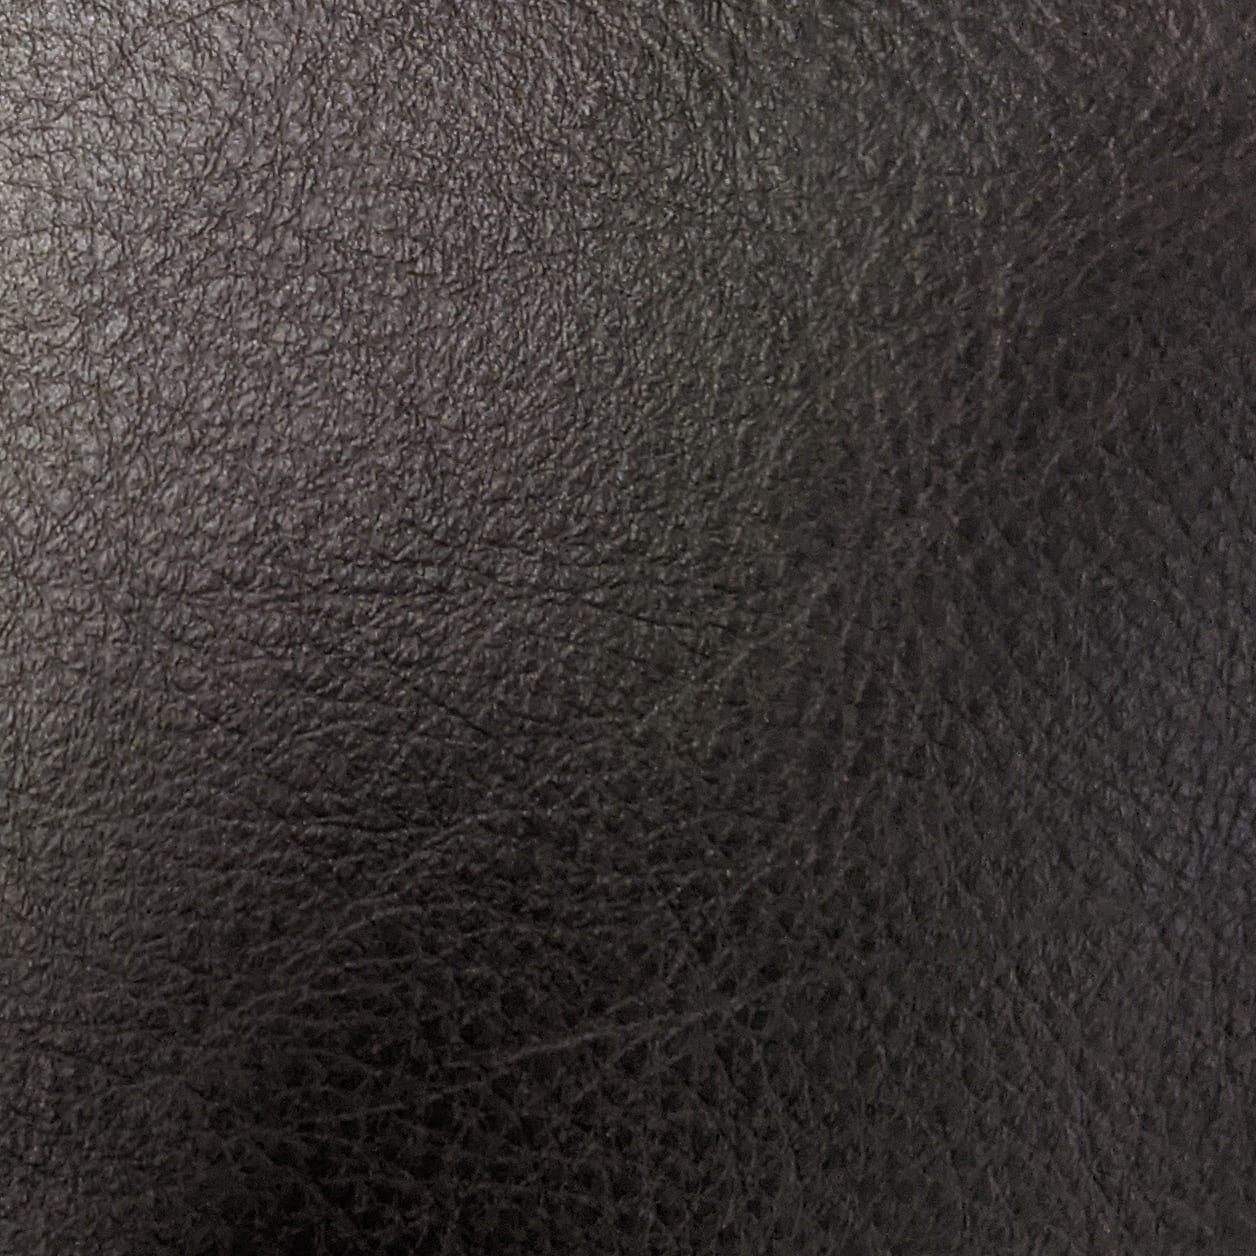 Barcelona Leather 3 Seat Sofa